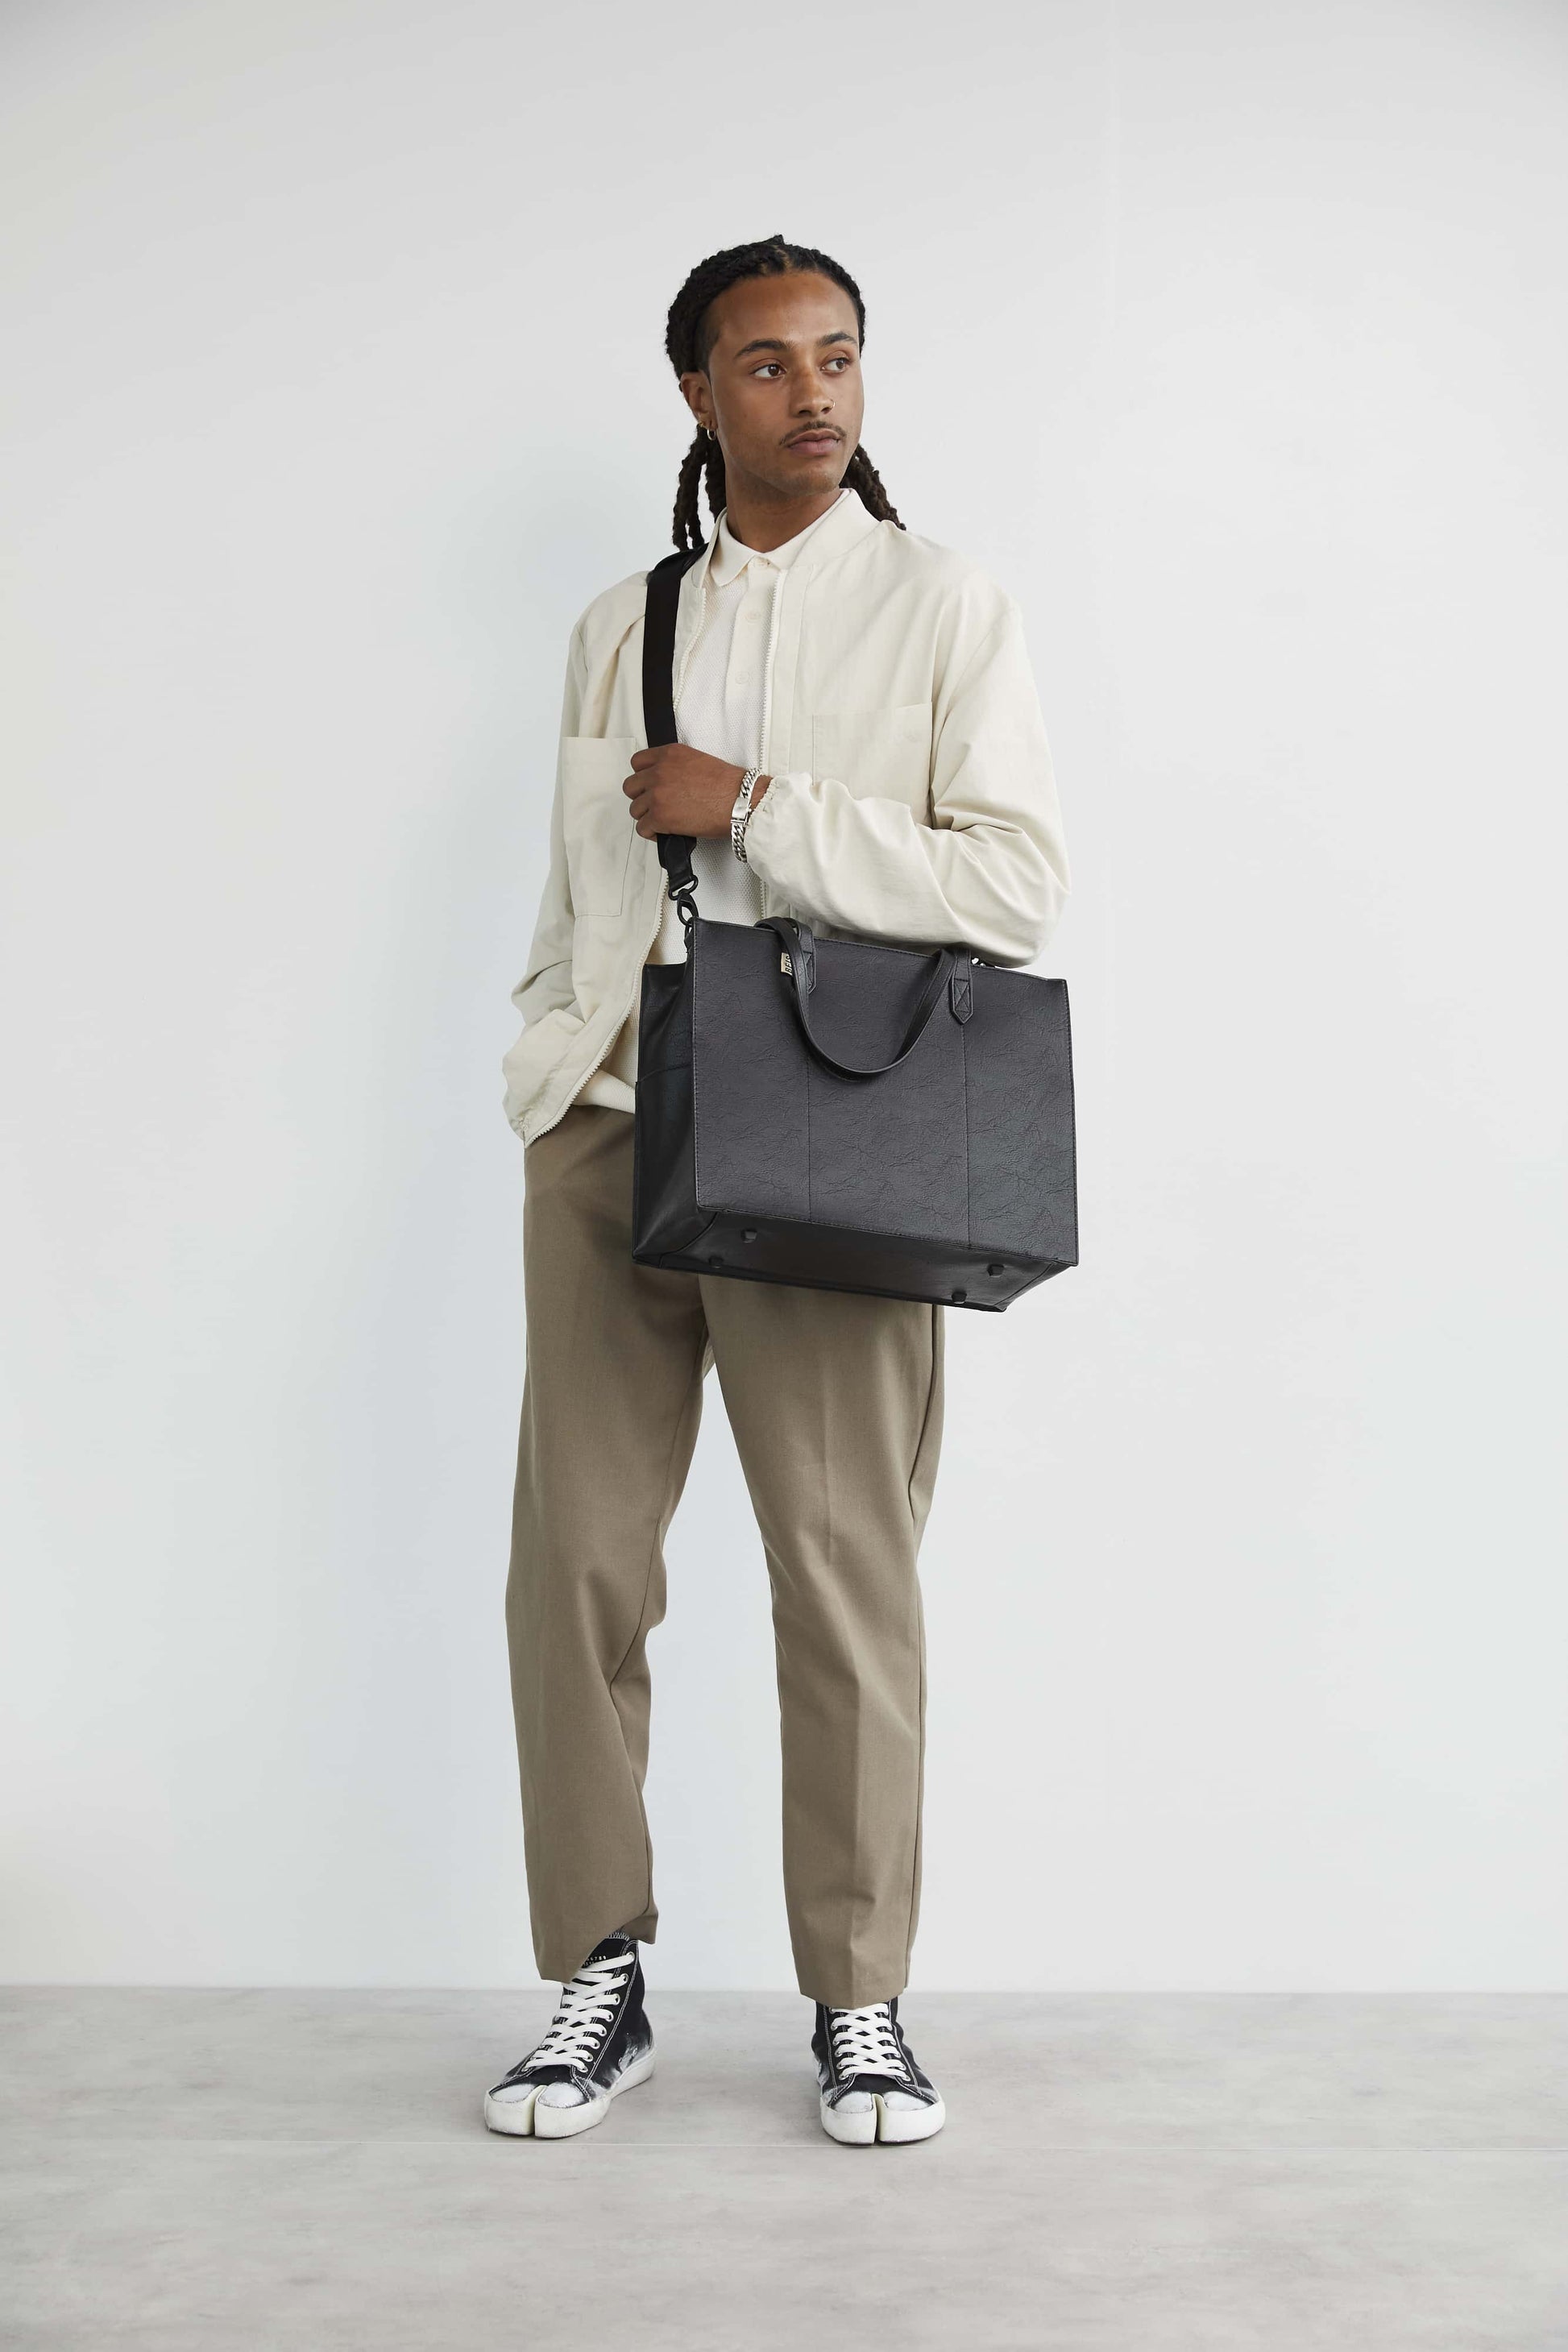 BÉIS 'The Work Tote' in Black - Work Bag For Women & Laptop Bag